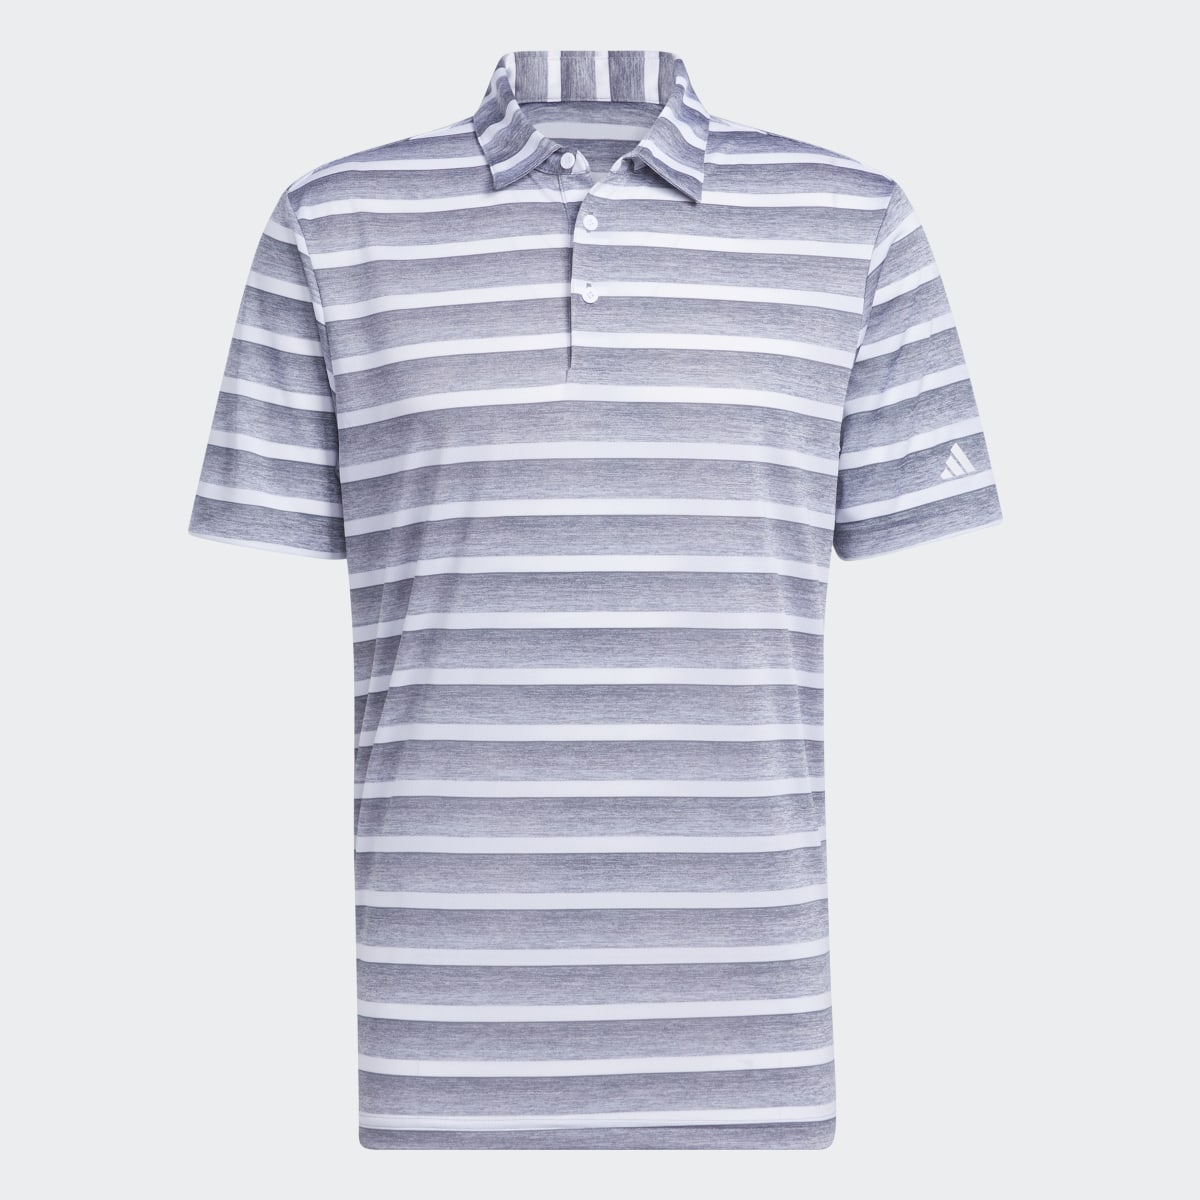 Adidas Two-Color Striped Polo Shirt. 5